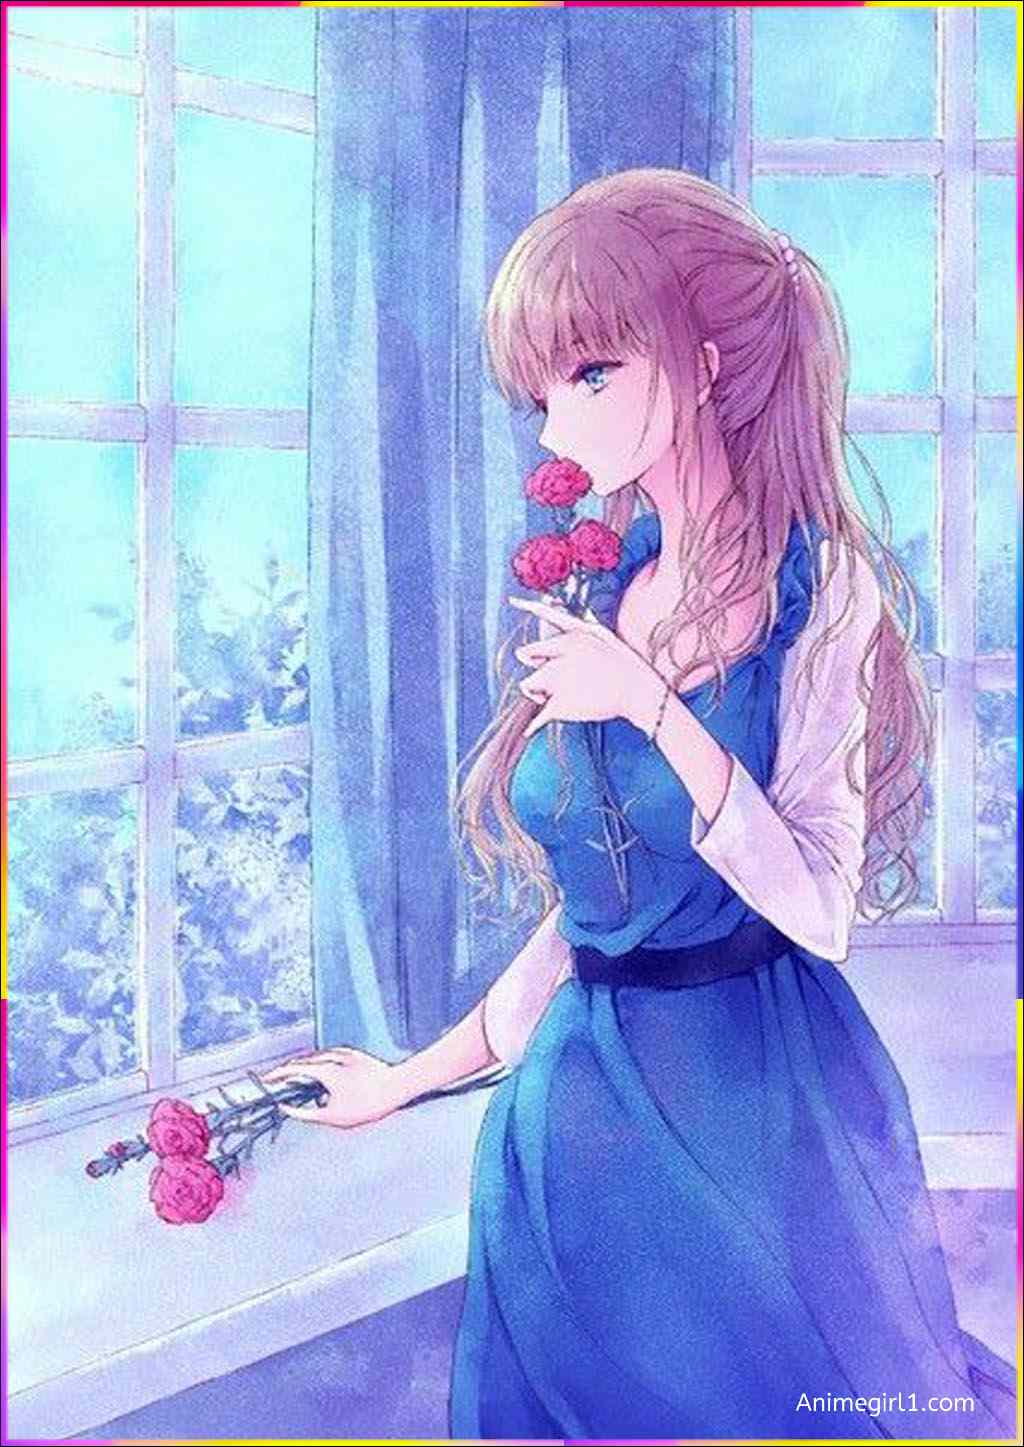 anime girl smelling flowers